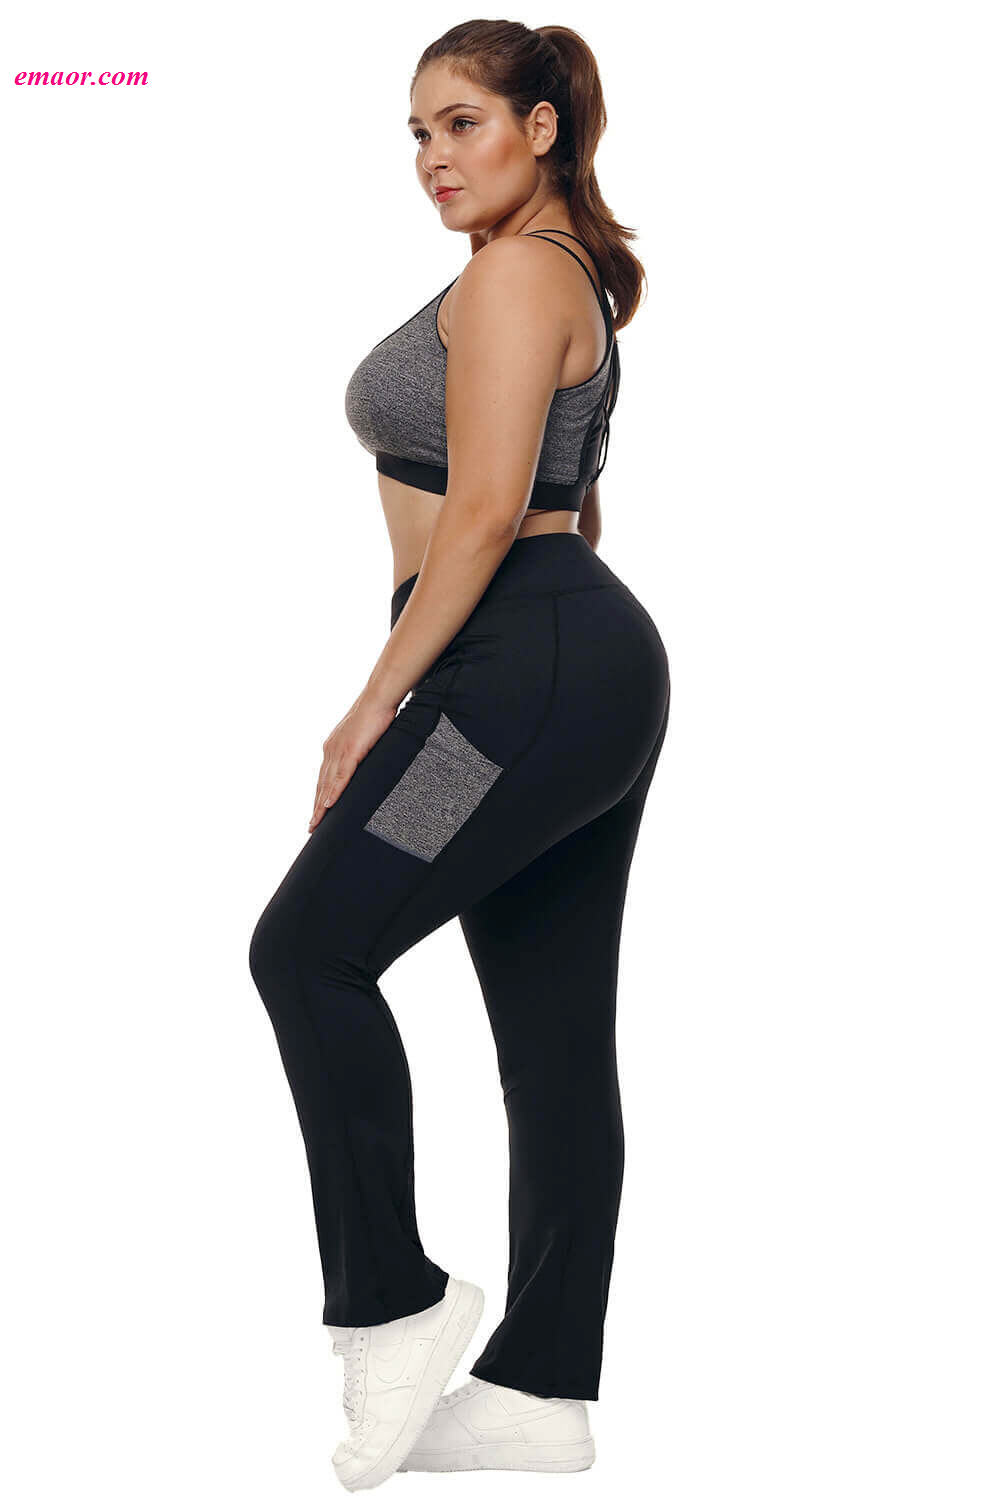 Hot High Waist Tummy Control Workout Bootleg Yoga Pants Yoga Pants Girls on Sale 